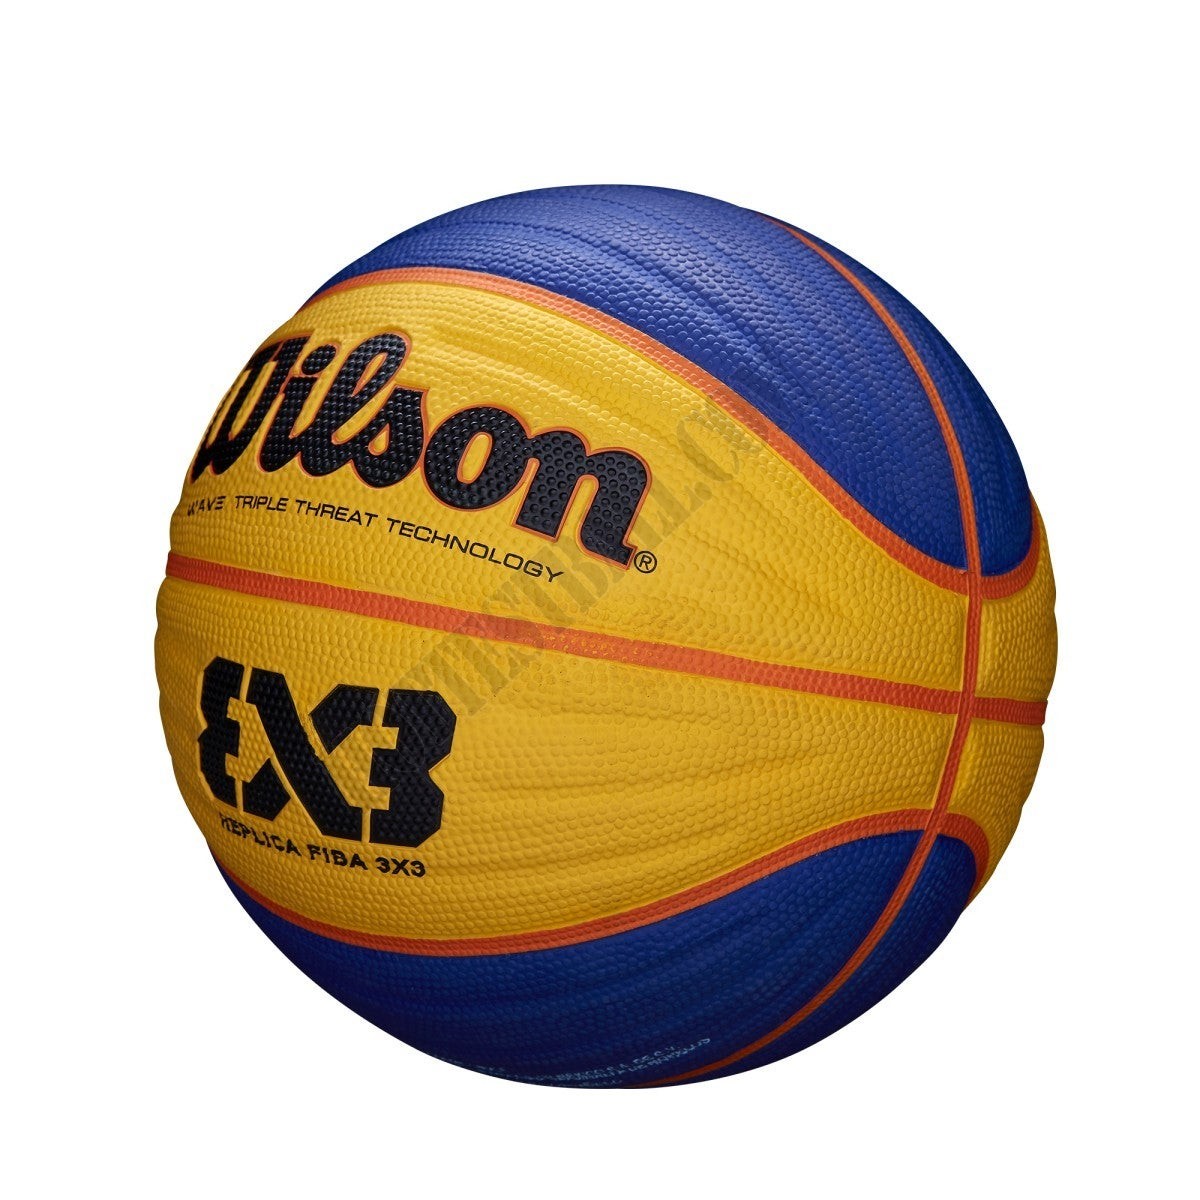 FIBA 3x3 Replica Game Basketball - Wilson Discount Store - -1